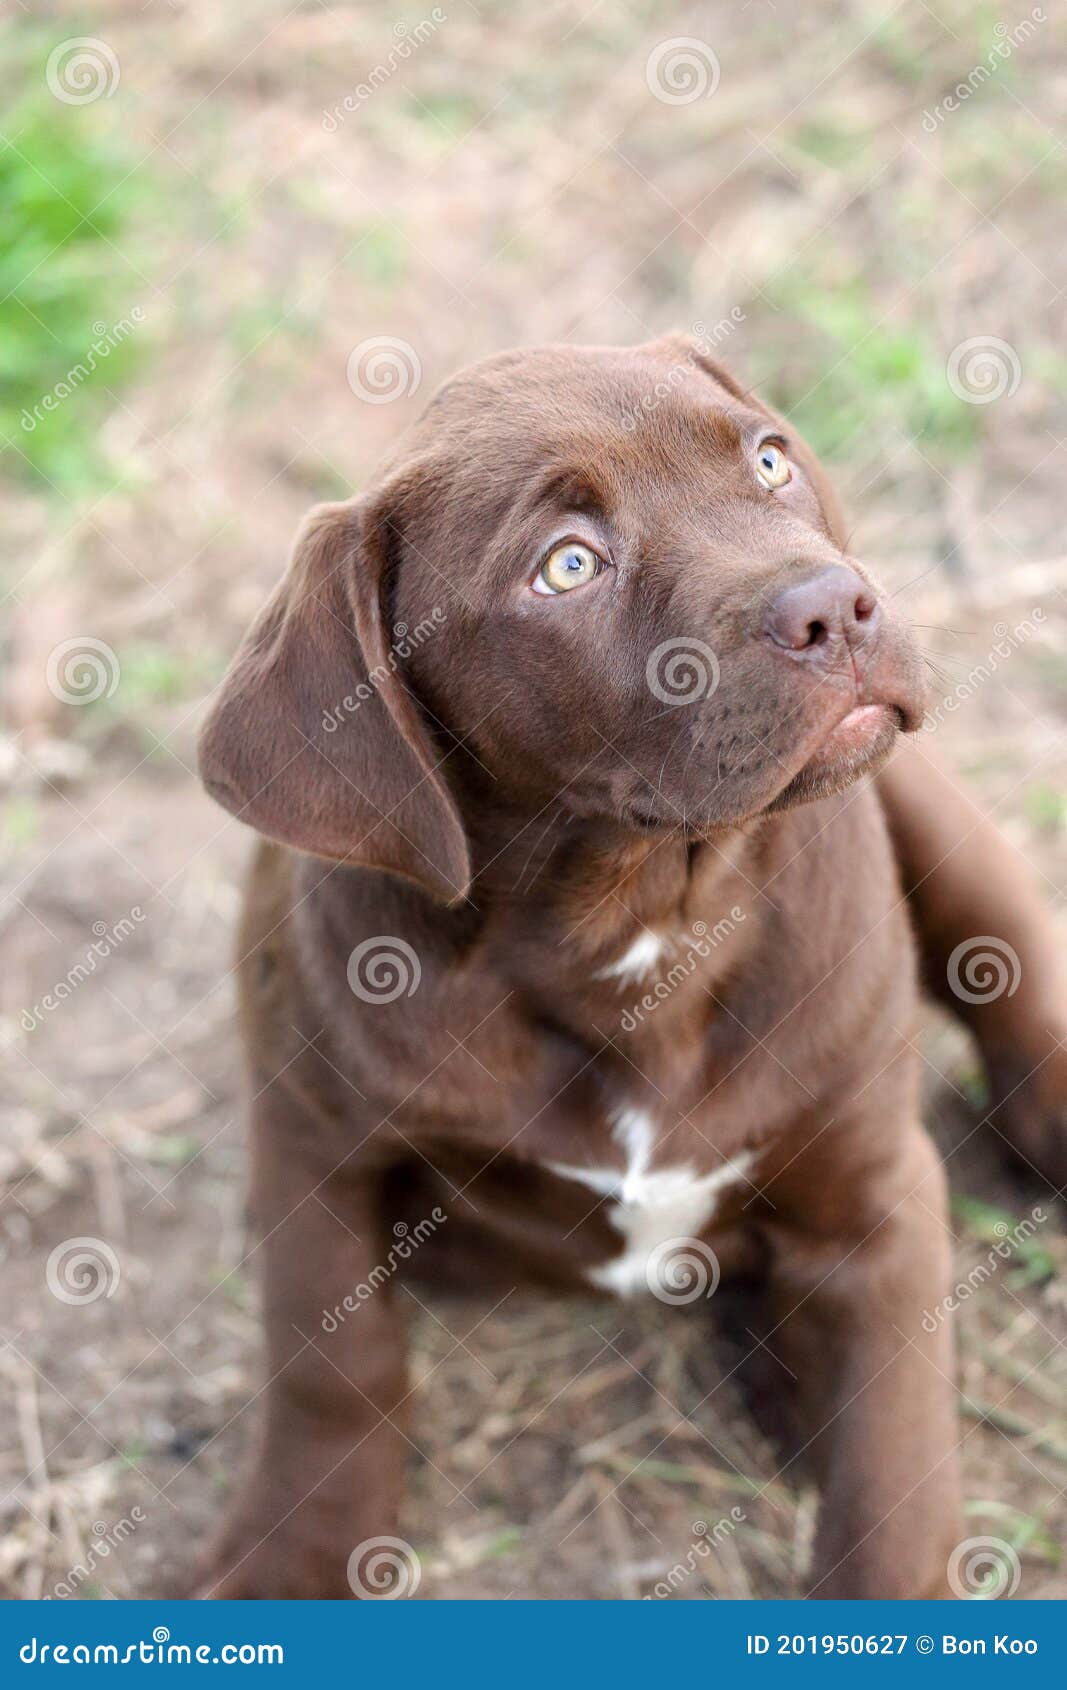 Chocolate Labrador Mix Puppy with a Sad Face Stock Image - adorable, 201950627